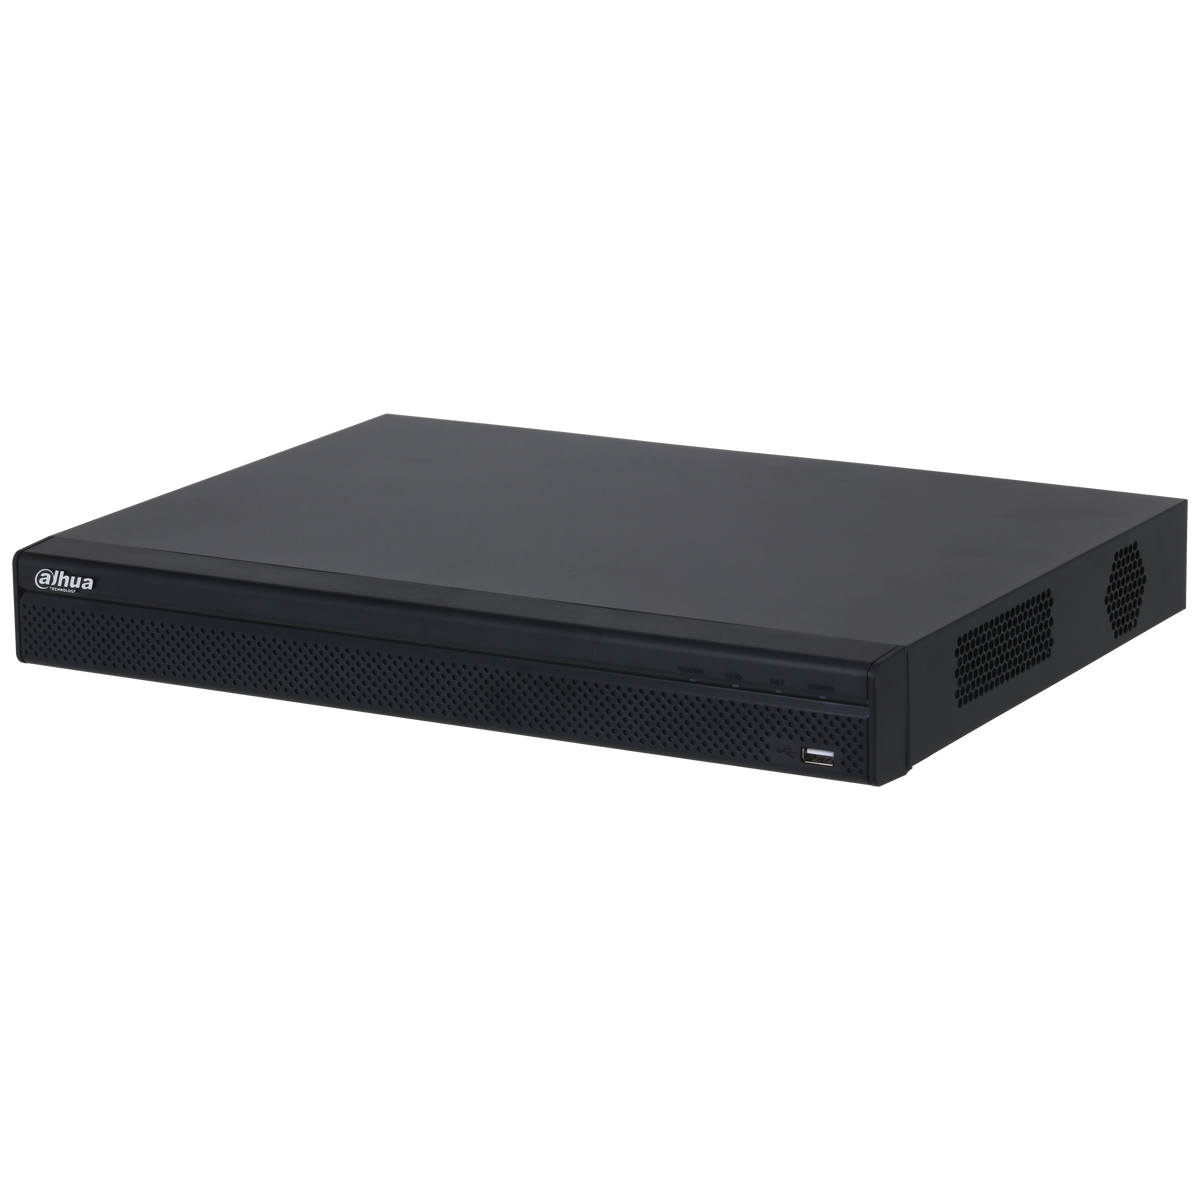 DAHUA NVR4216-4KS3 16CH 1U 2HDDs Lite Network Video Recorder